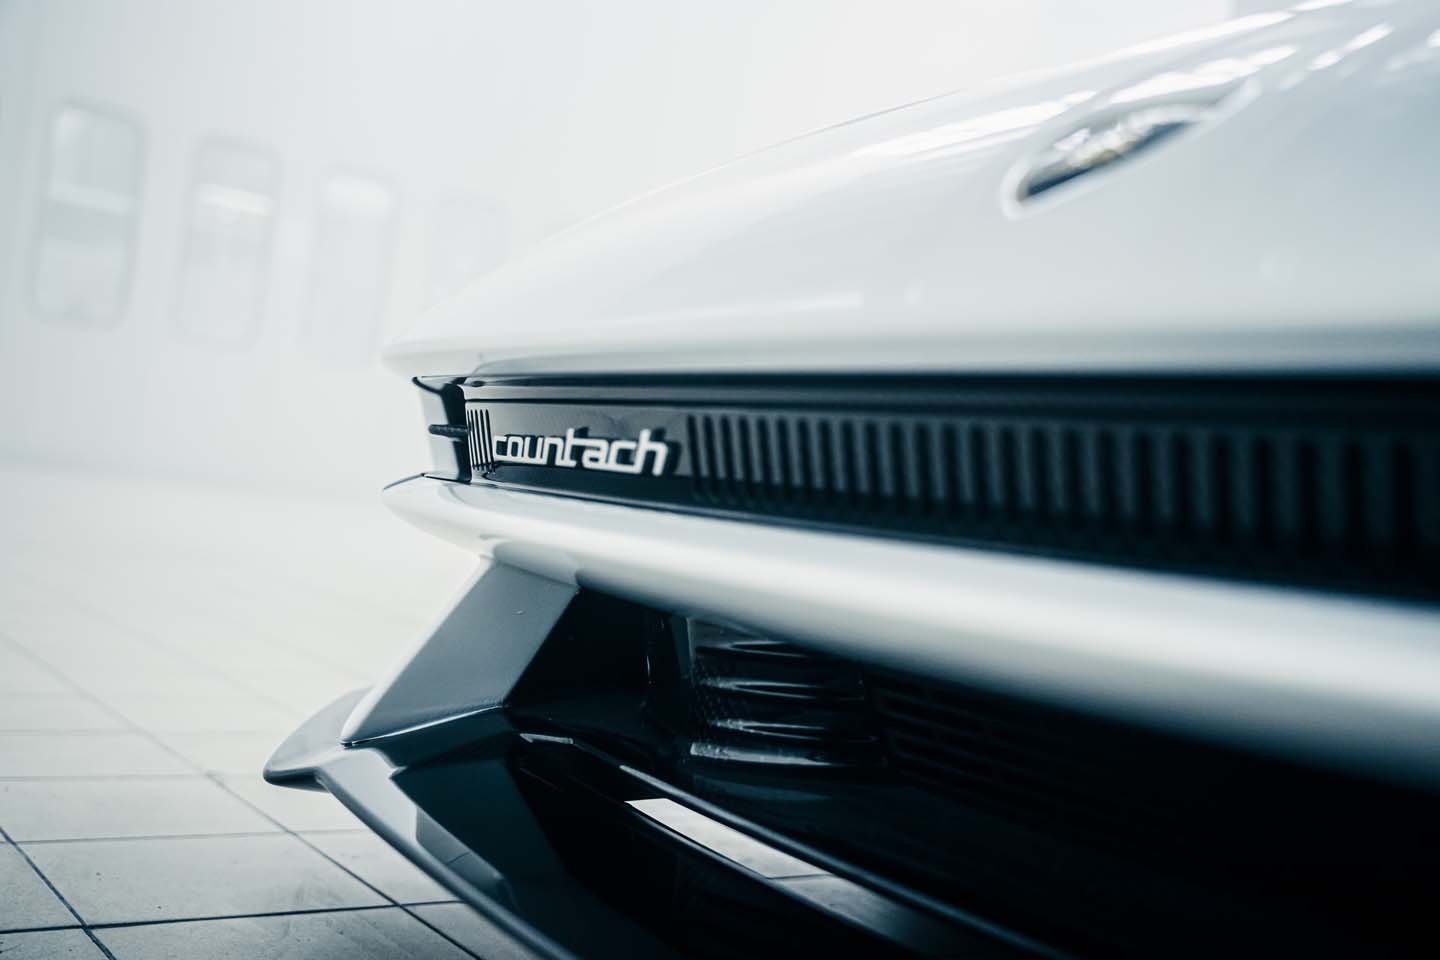 Closeup of 2022 Lamborghini Countach front end